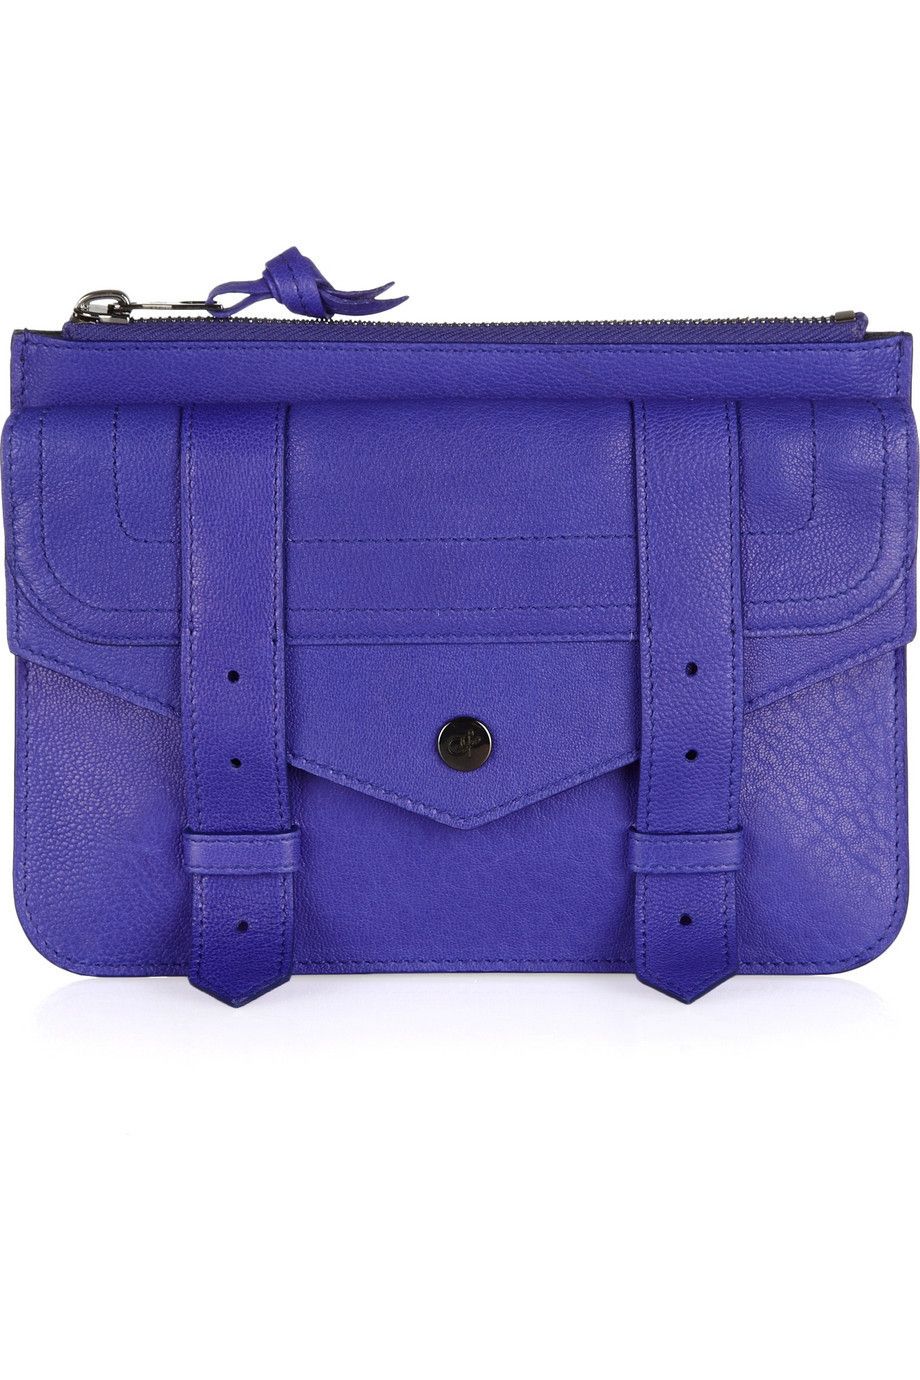 Bag, Electric blue, Purple, Azure, Luggage and bags, Cobalt blue, Rectangle, Pocket, Baggage, Wallet, 